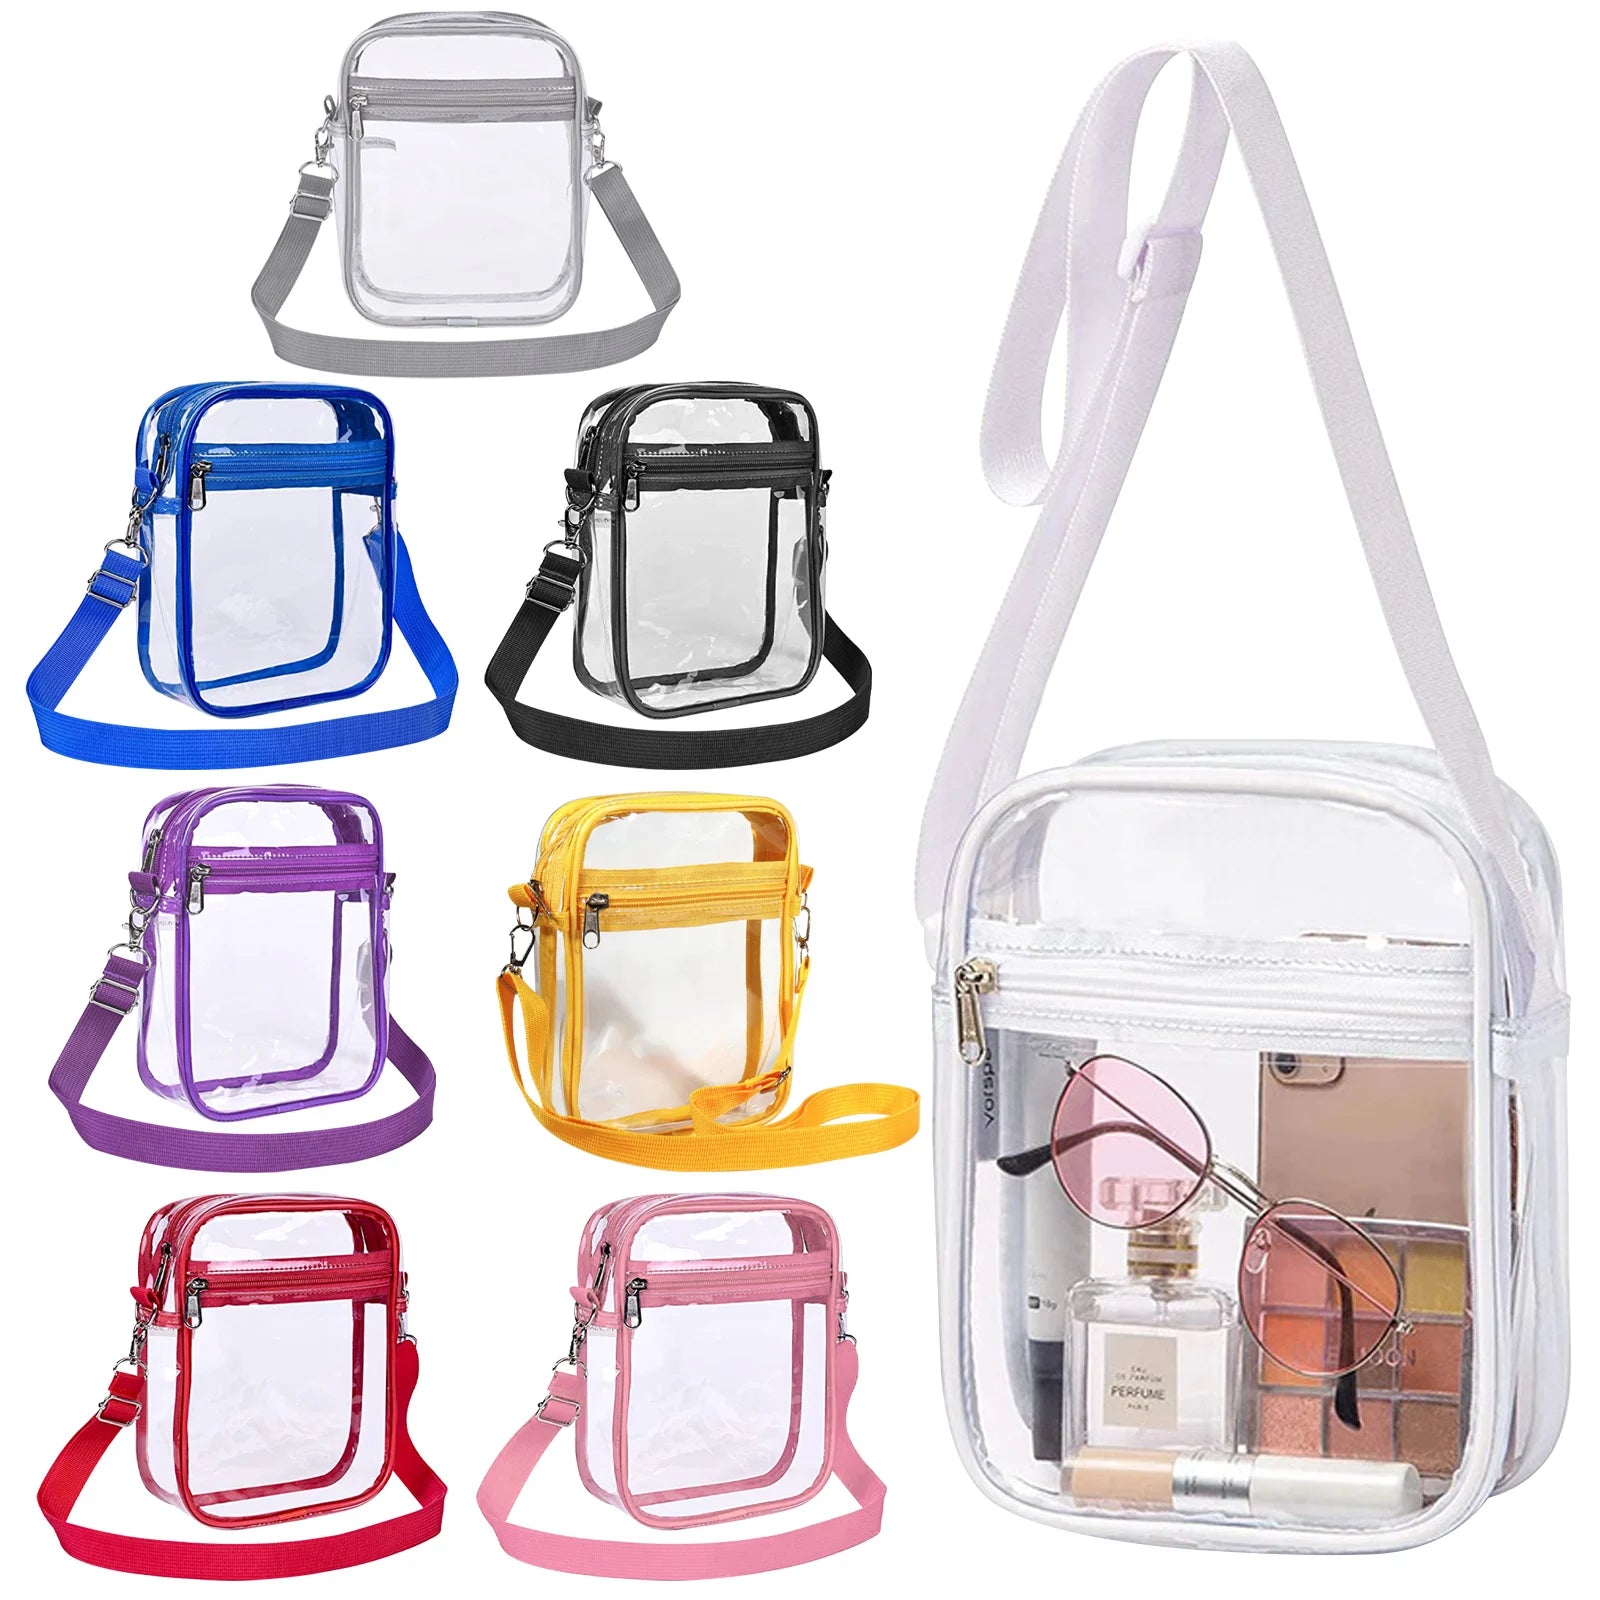 Transparent Crossbody Bags Small Simple Zipper Shoulder Bag Summer All-Match Fashion Clear PVC Handbags Purses Phone Bag